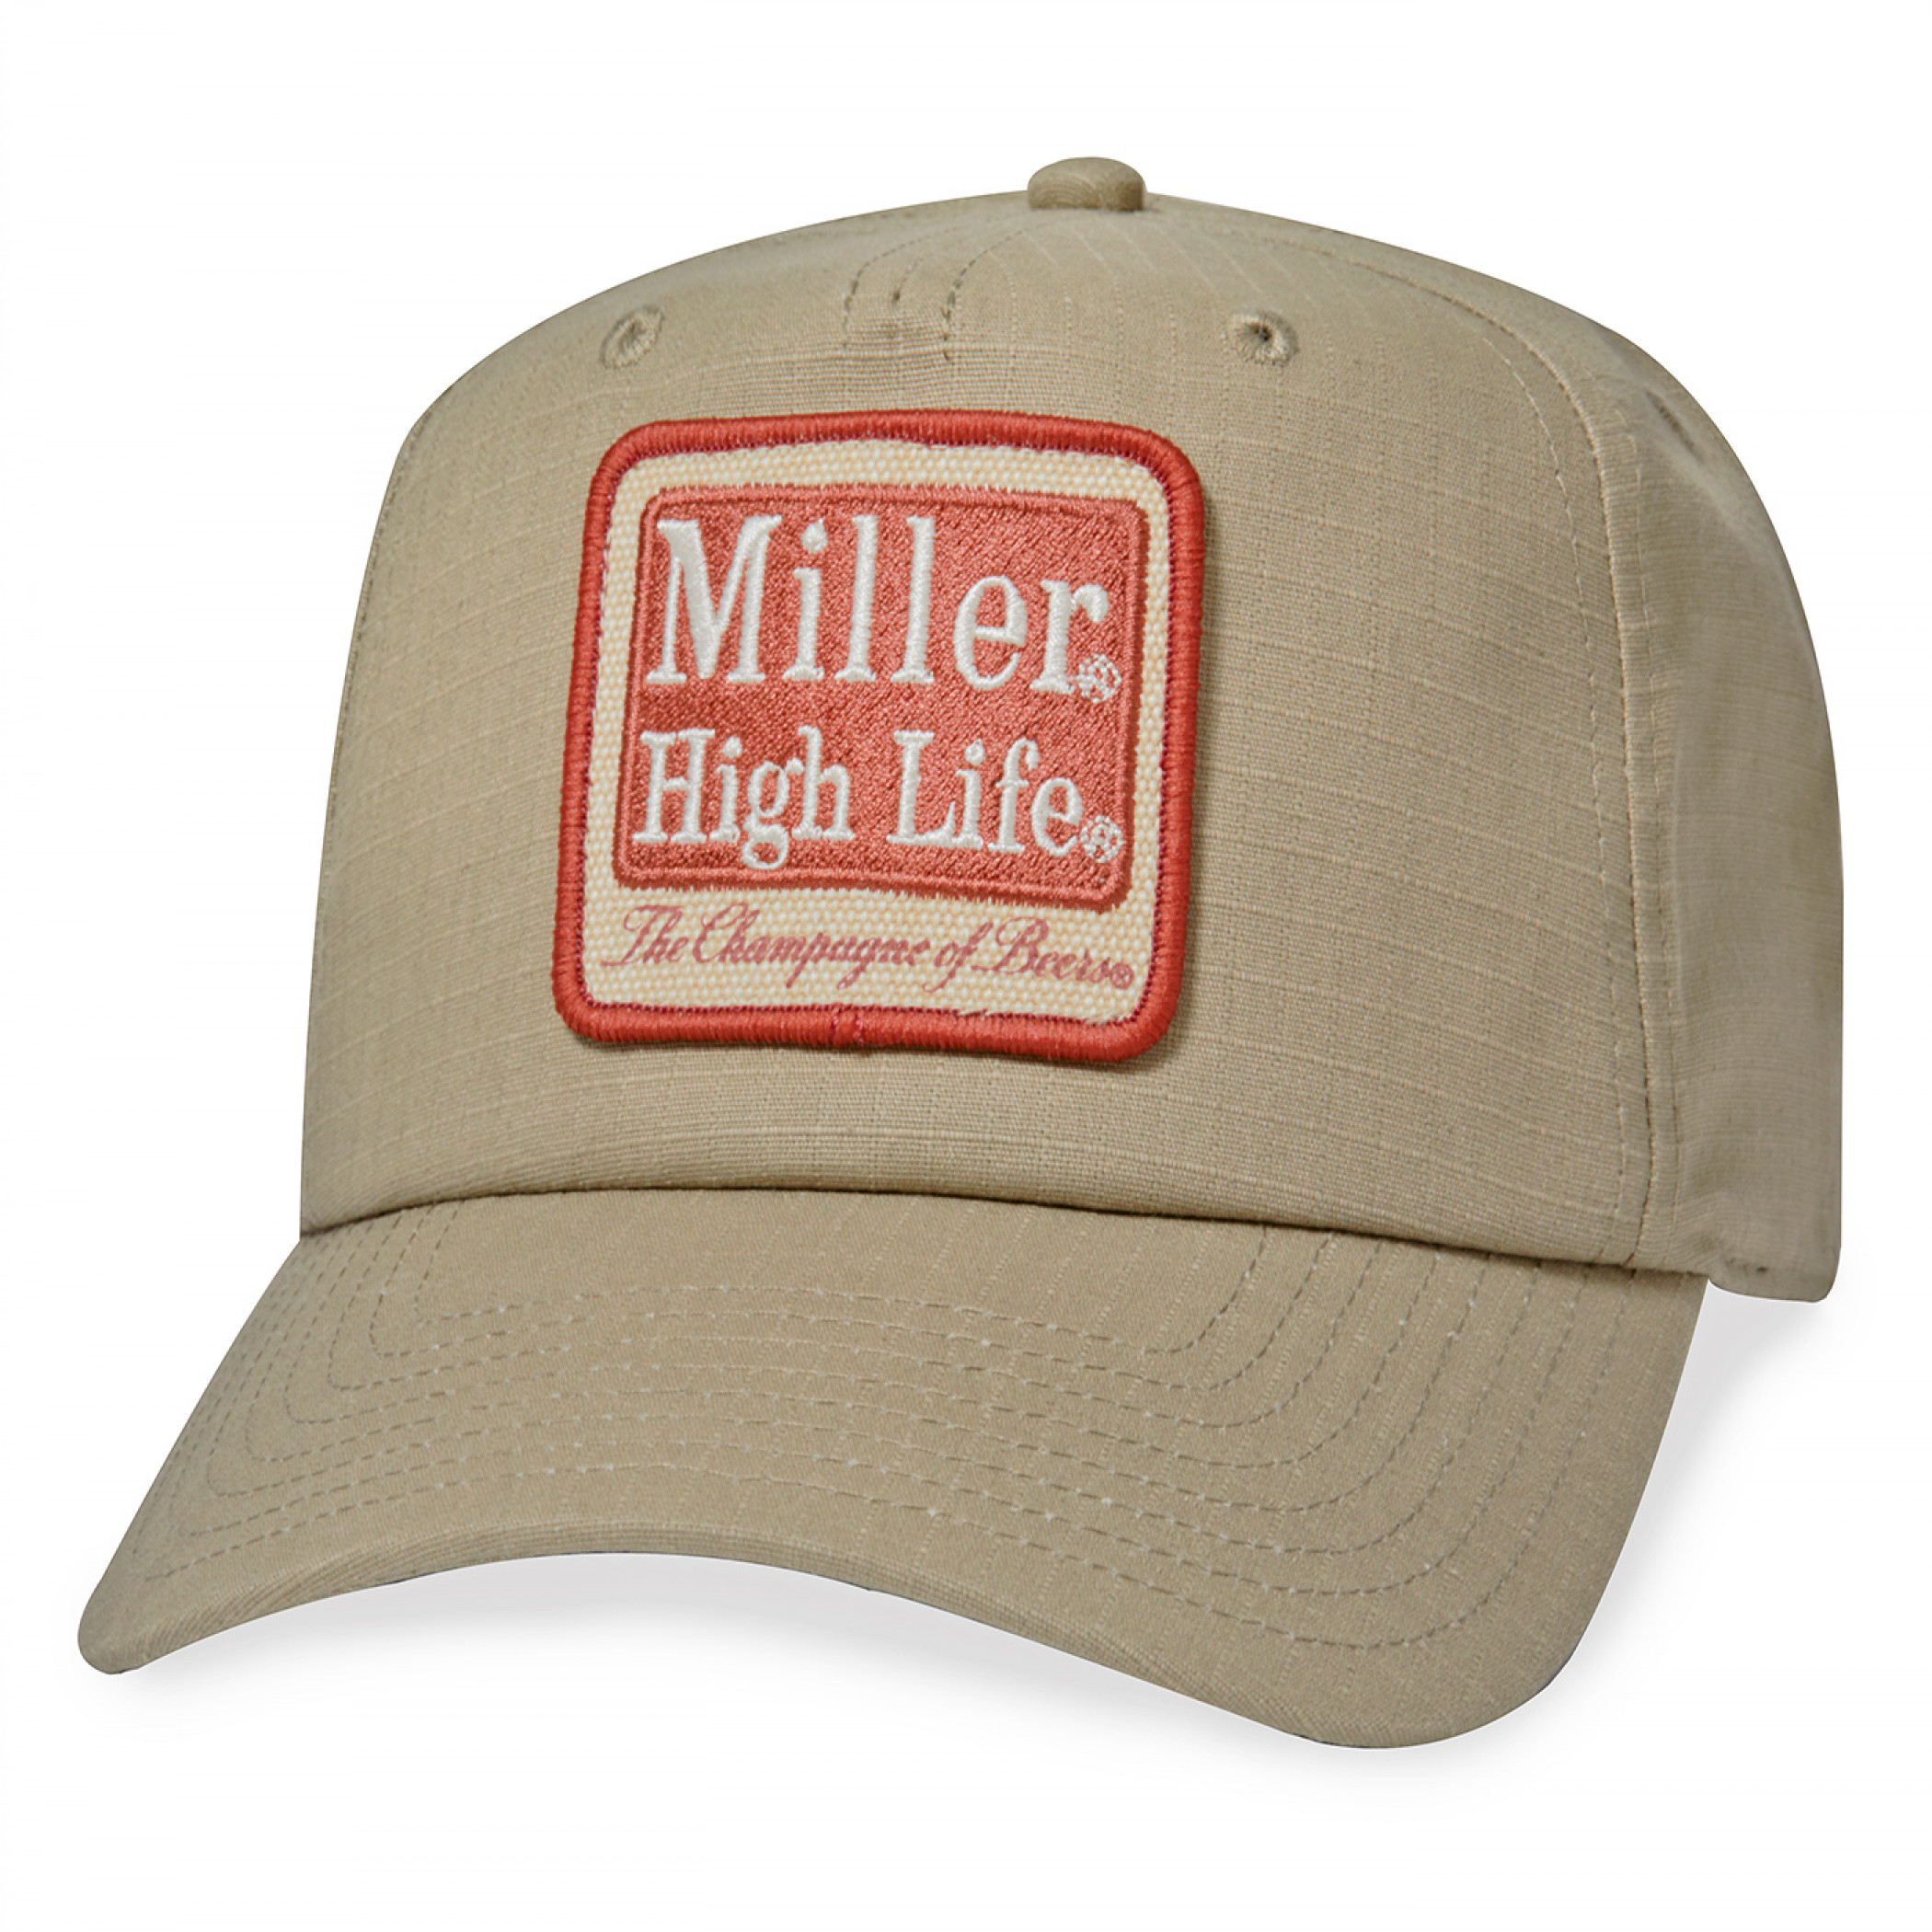 Miller High Life Beer Surplus Style Hat